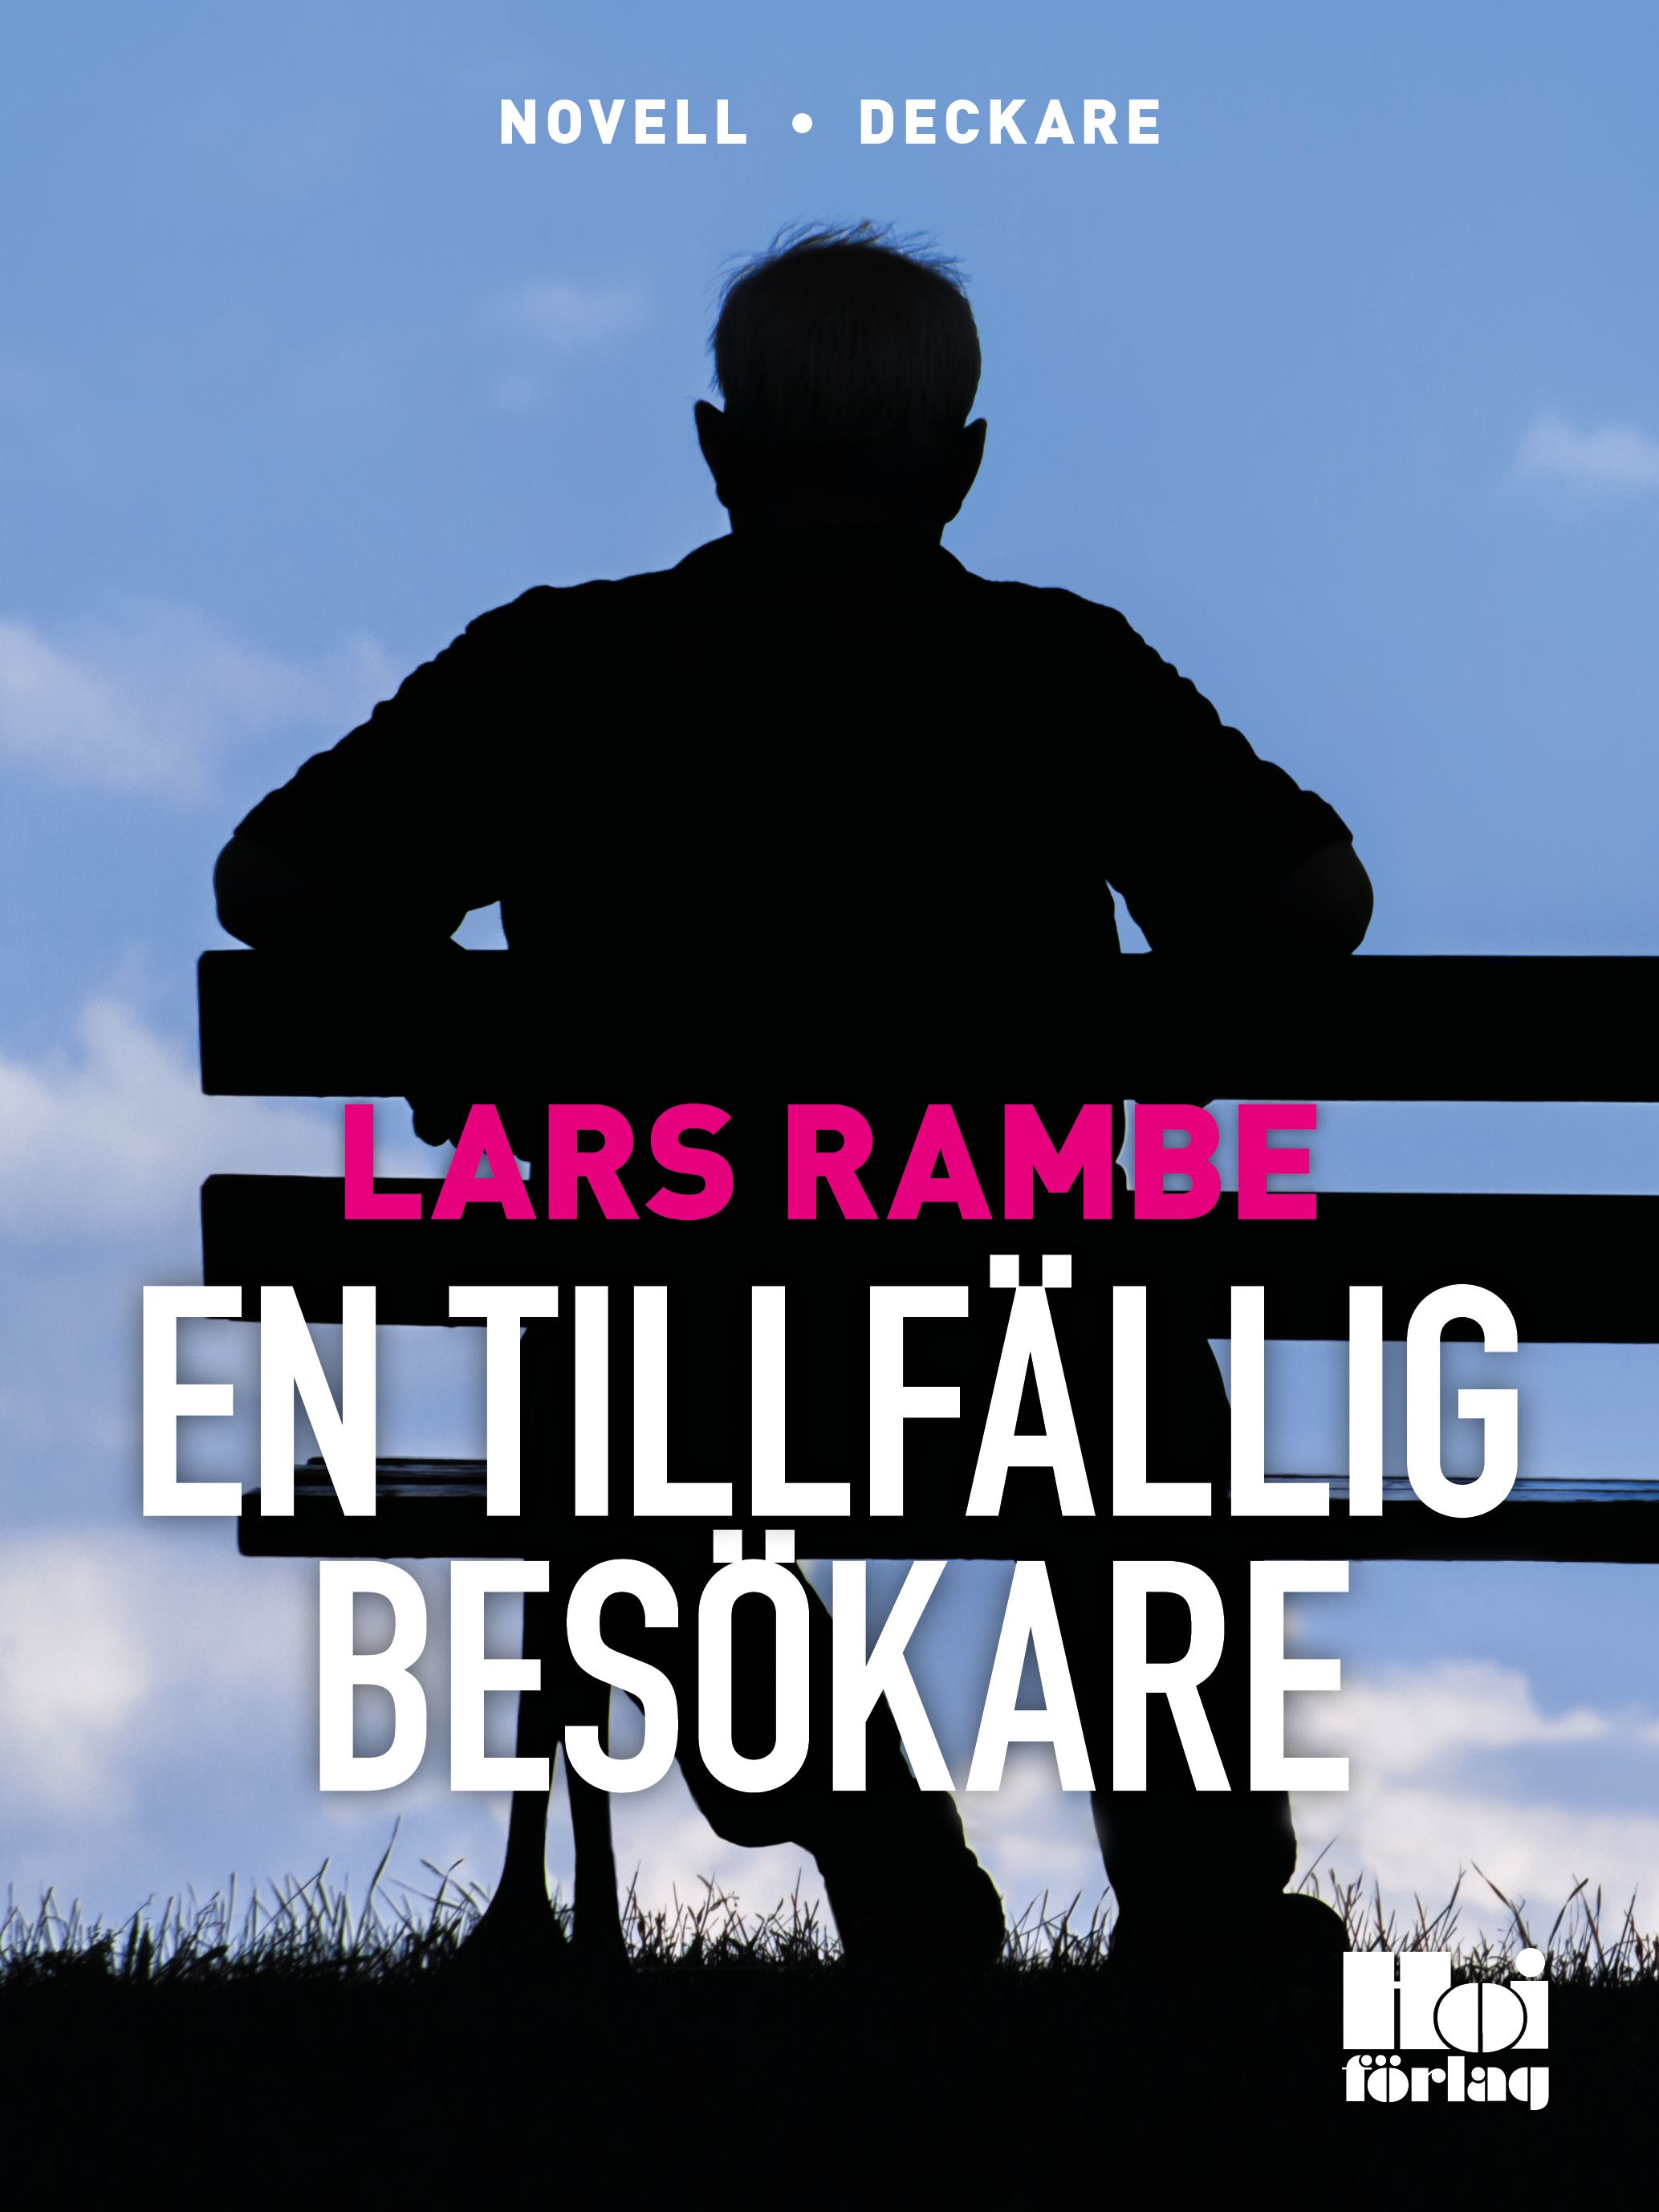 En tillfällig besökare, e-bog af Lars Rambe